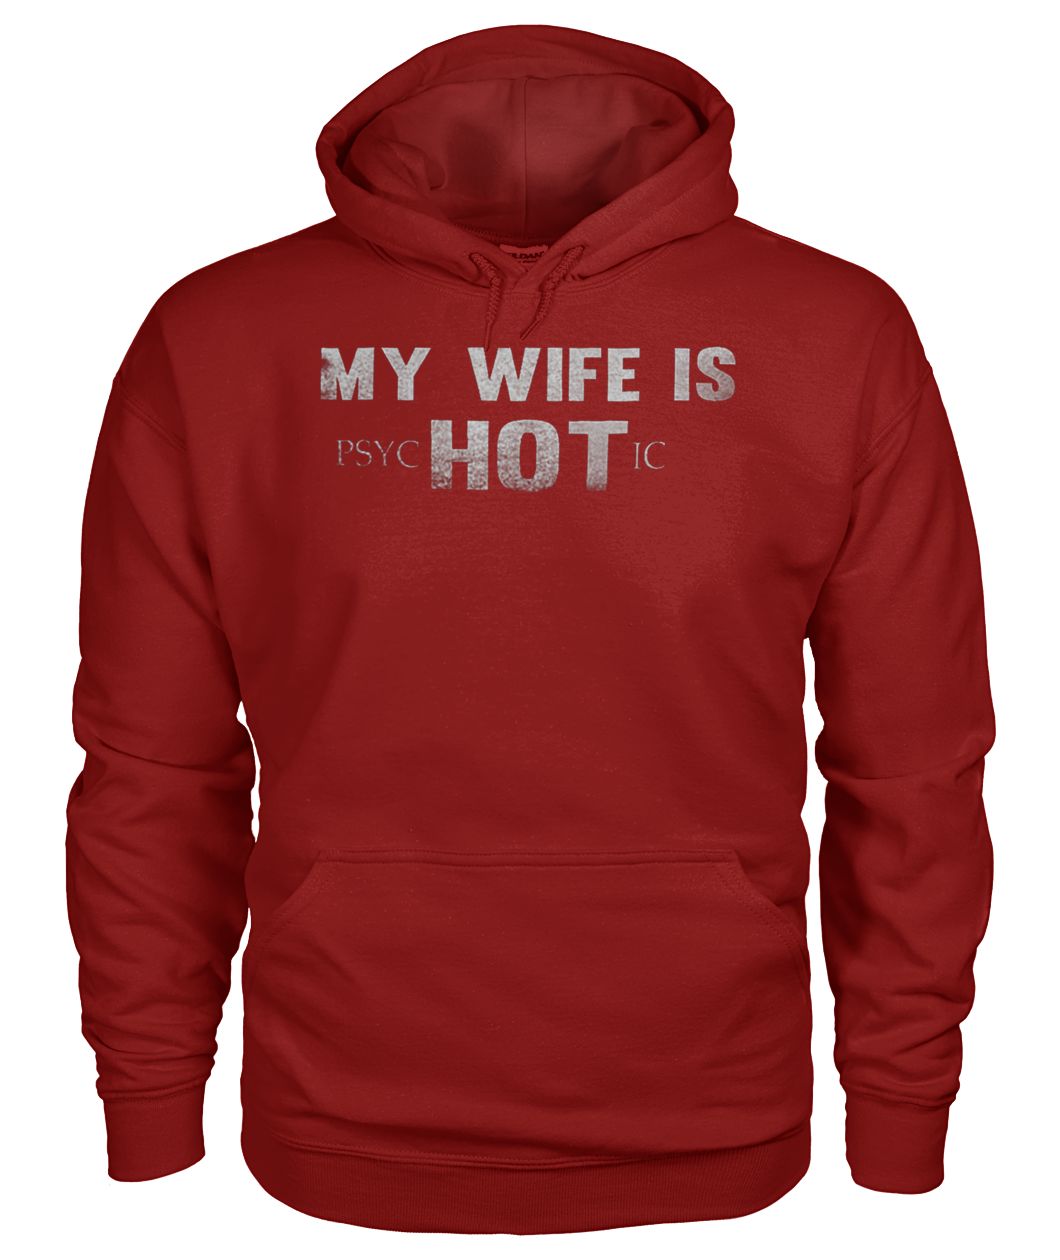 My wife is psychotic hot gildan hoodie